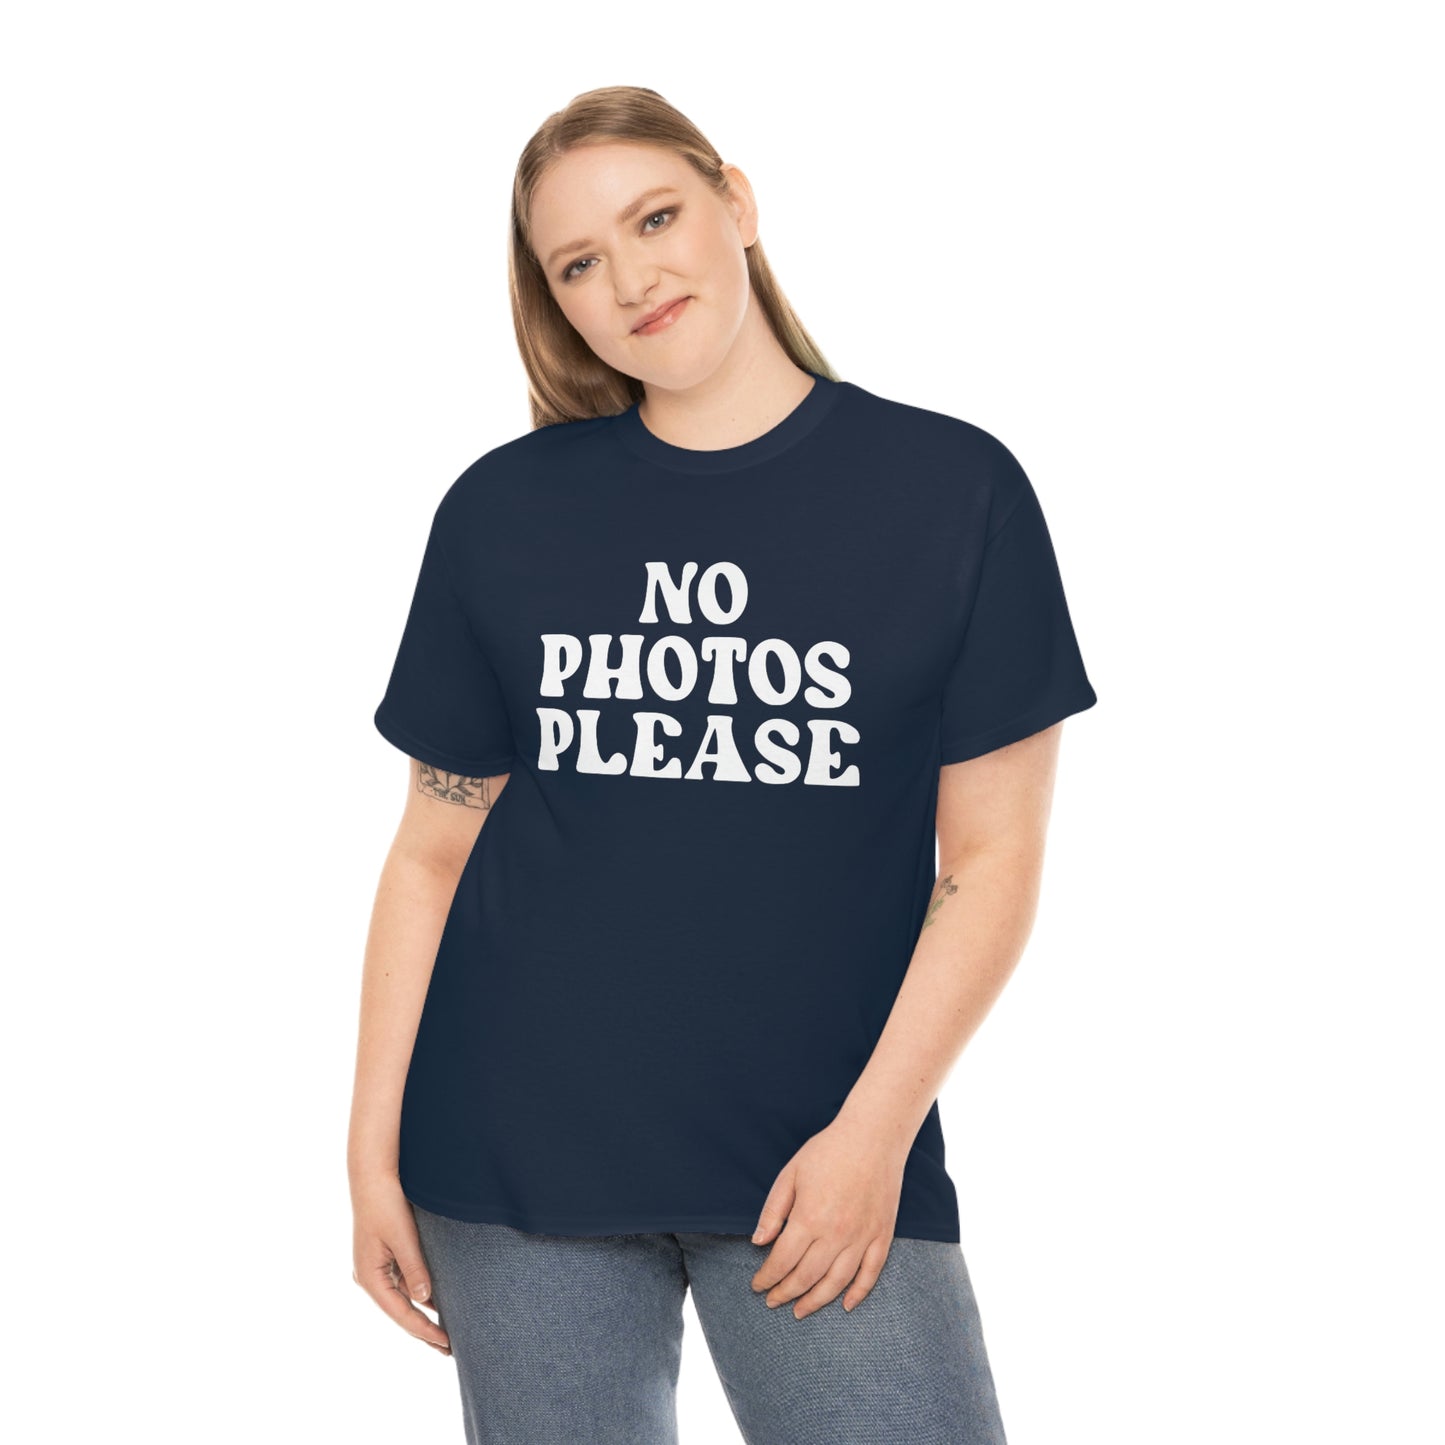 NO PHOTOS PLEASE T-SHIRT